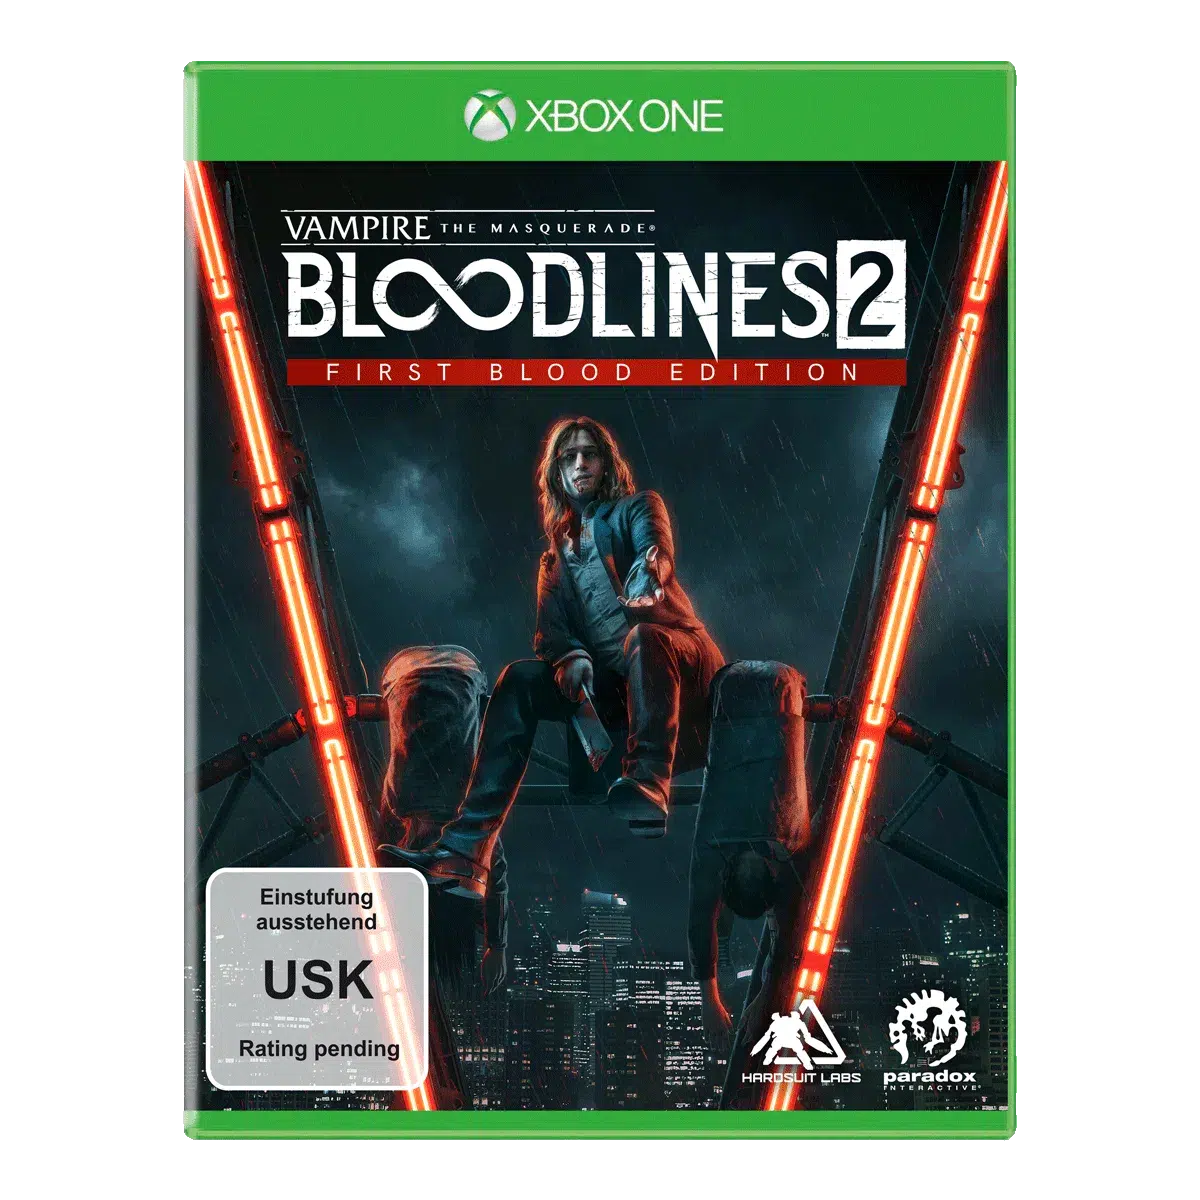 Vampire: The Masquerade Bloodlines 2 First Blood Edition (XONE)